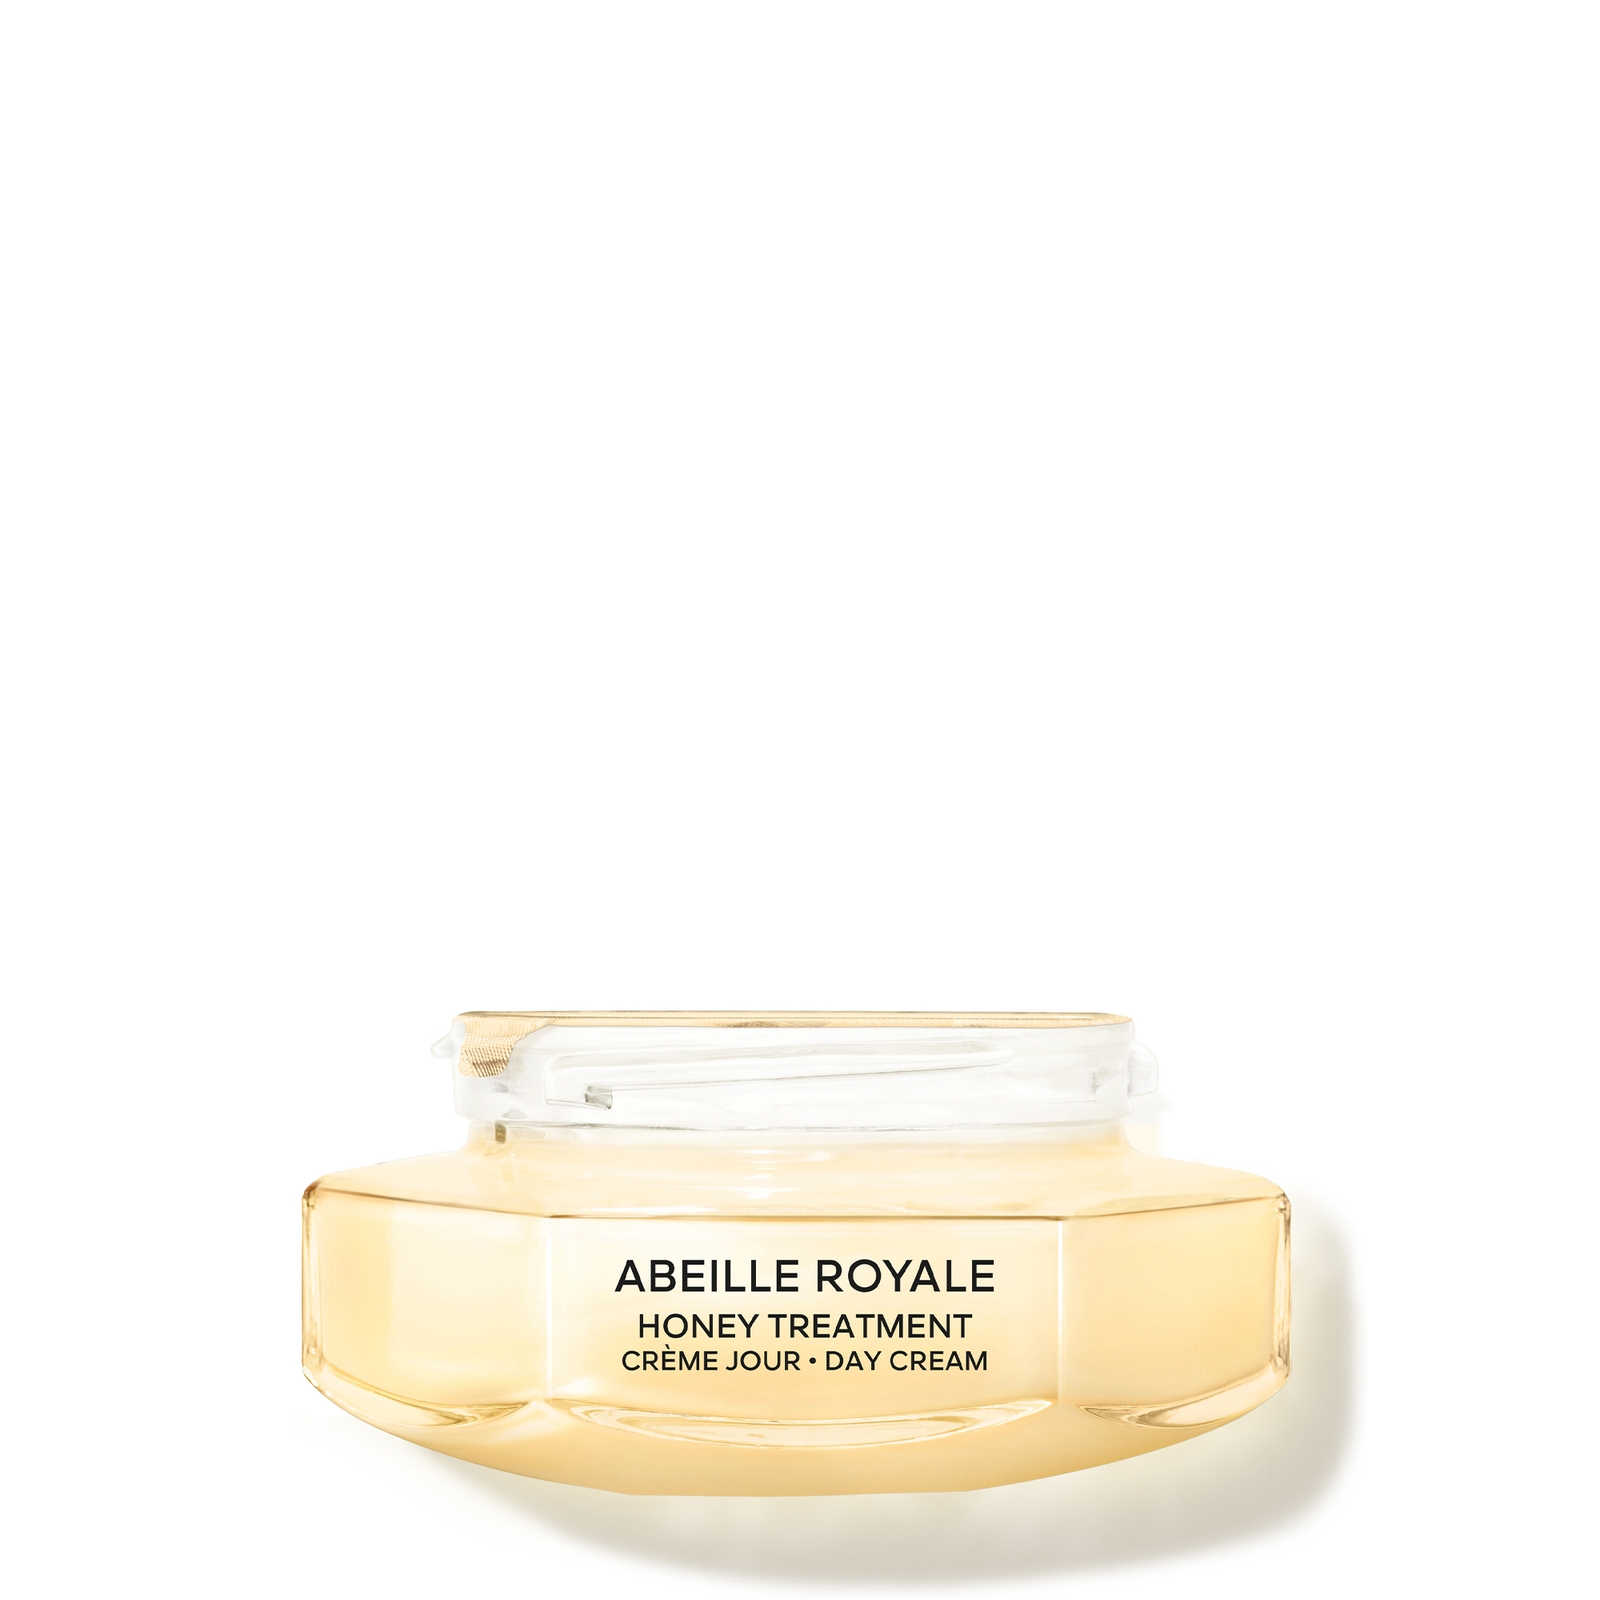 Photos - Cream / Lotion Guerlain Abeille Royale Honey Treatment Day Cream - The Refill 50ml 